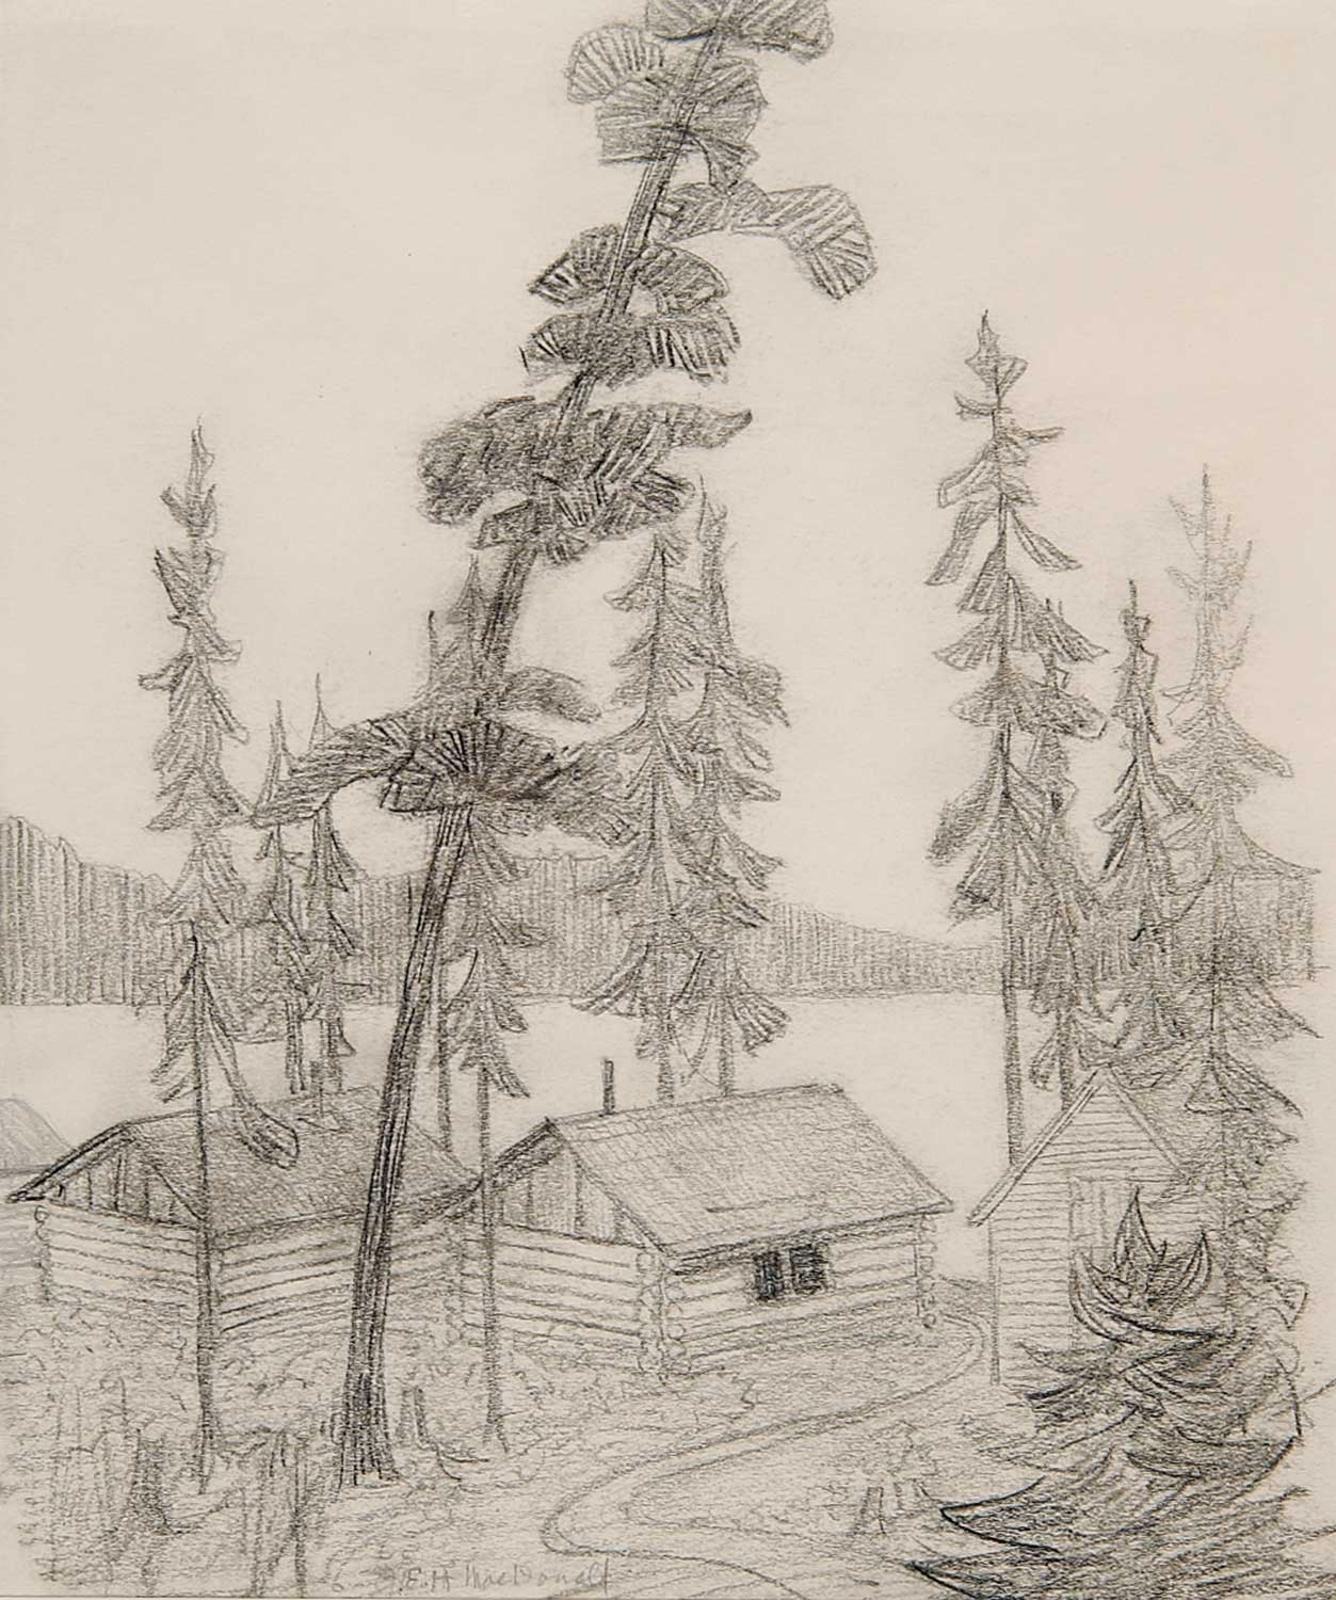 Atributted James Edward Hervey MacDonald - Untitled - Cabins on the Lake